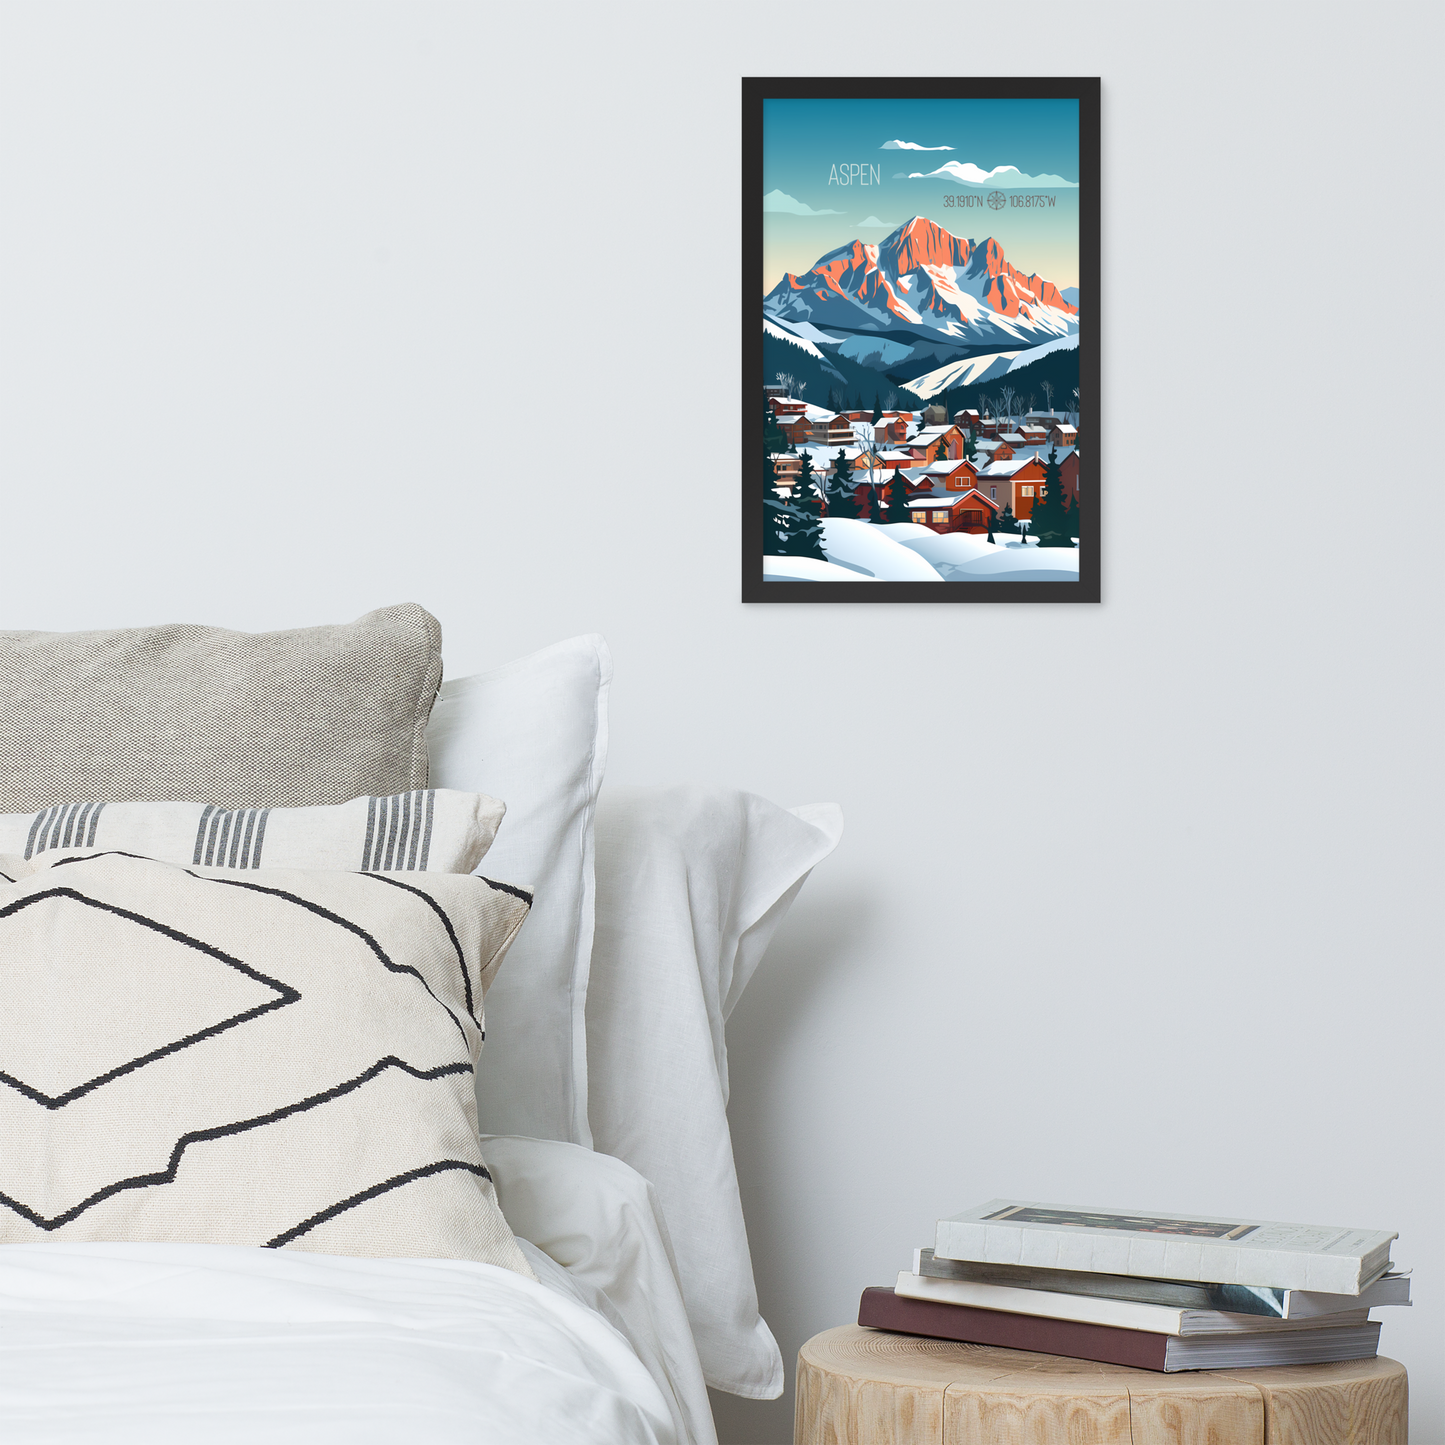 Colorado - Aspen (Framed poster)